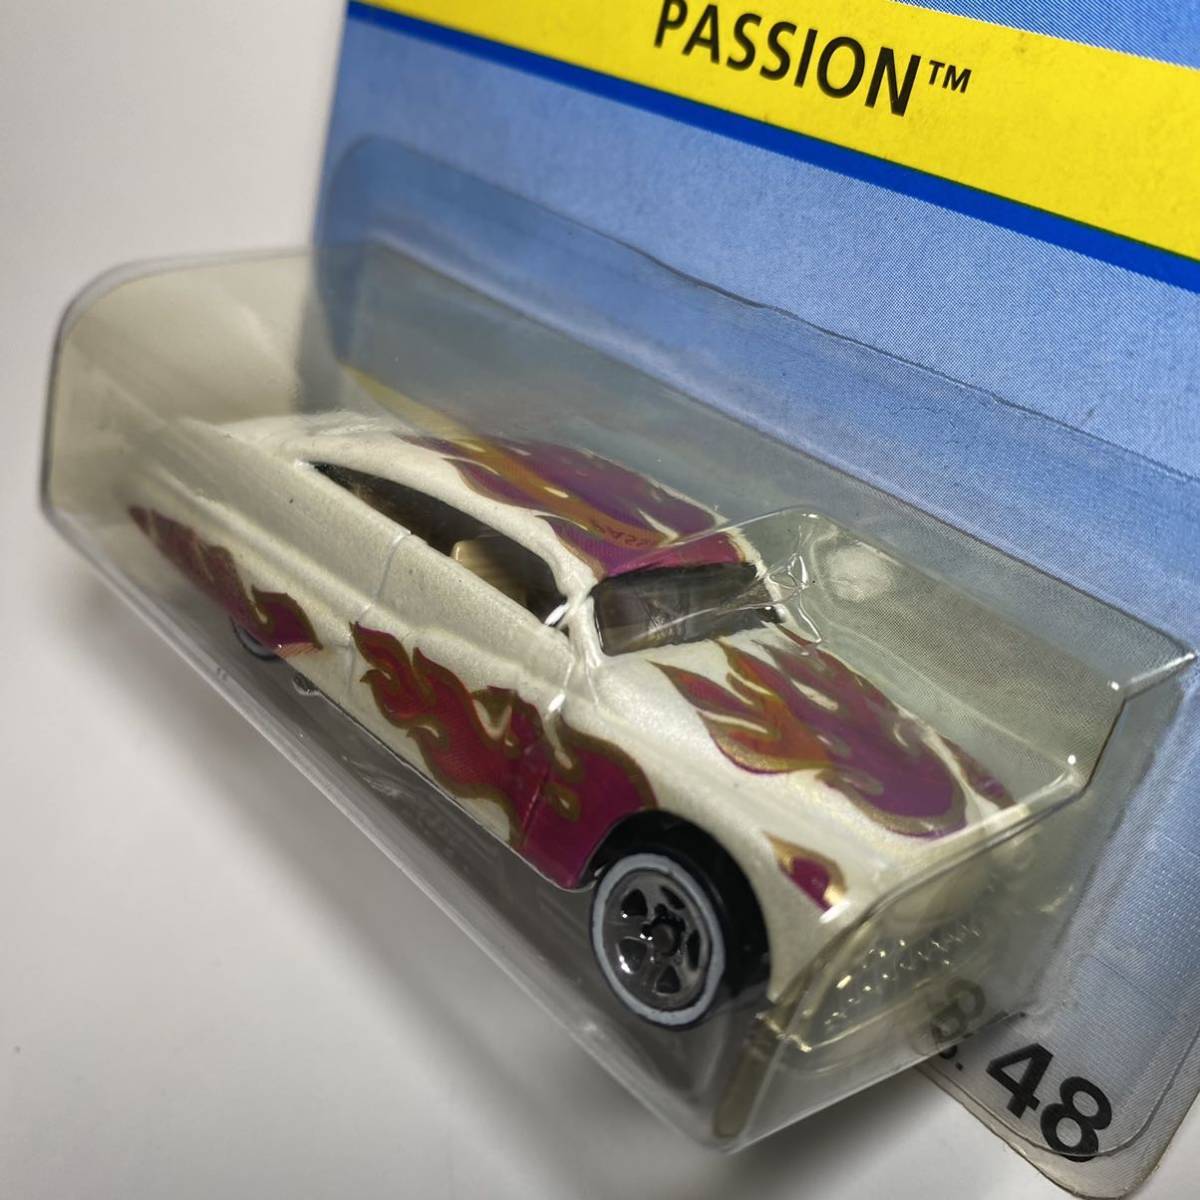 Hot Wheels M&D TOYS Purple Passion 1 of 8000 Limited Edition ホットウィール パッション_画像4